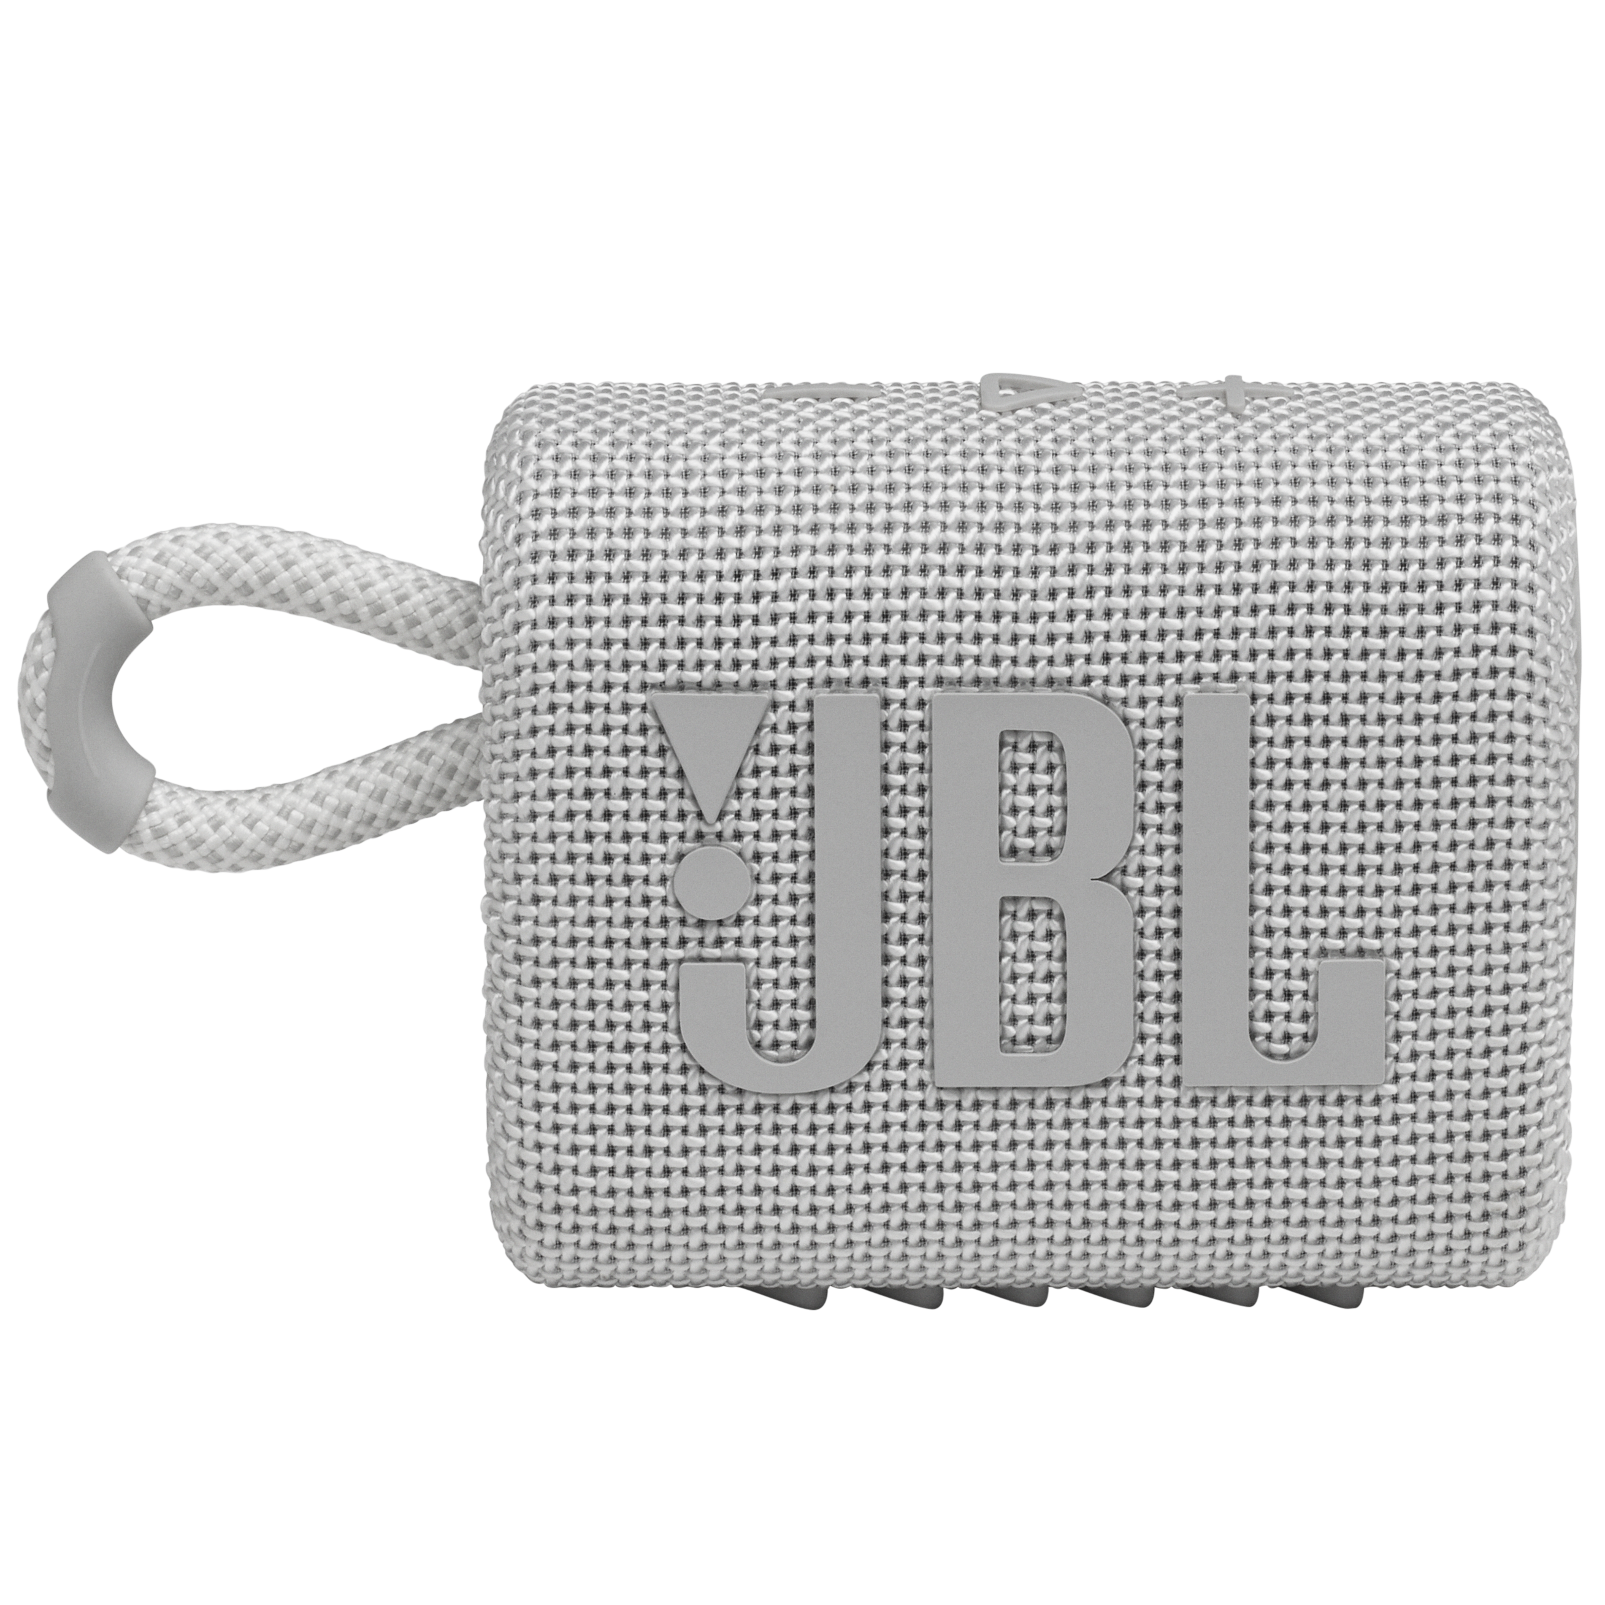 JBL Go 3 - White - Portable Waterproof Speaker - Front